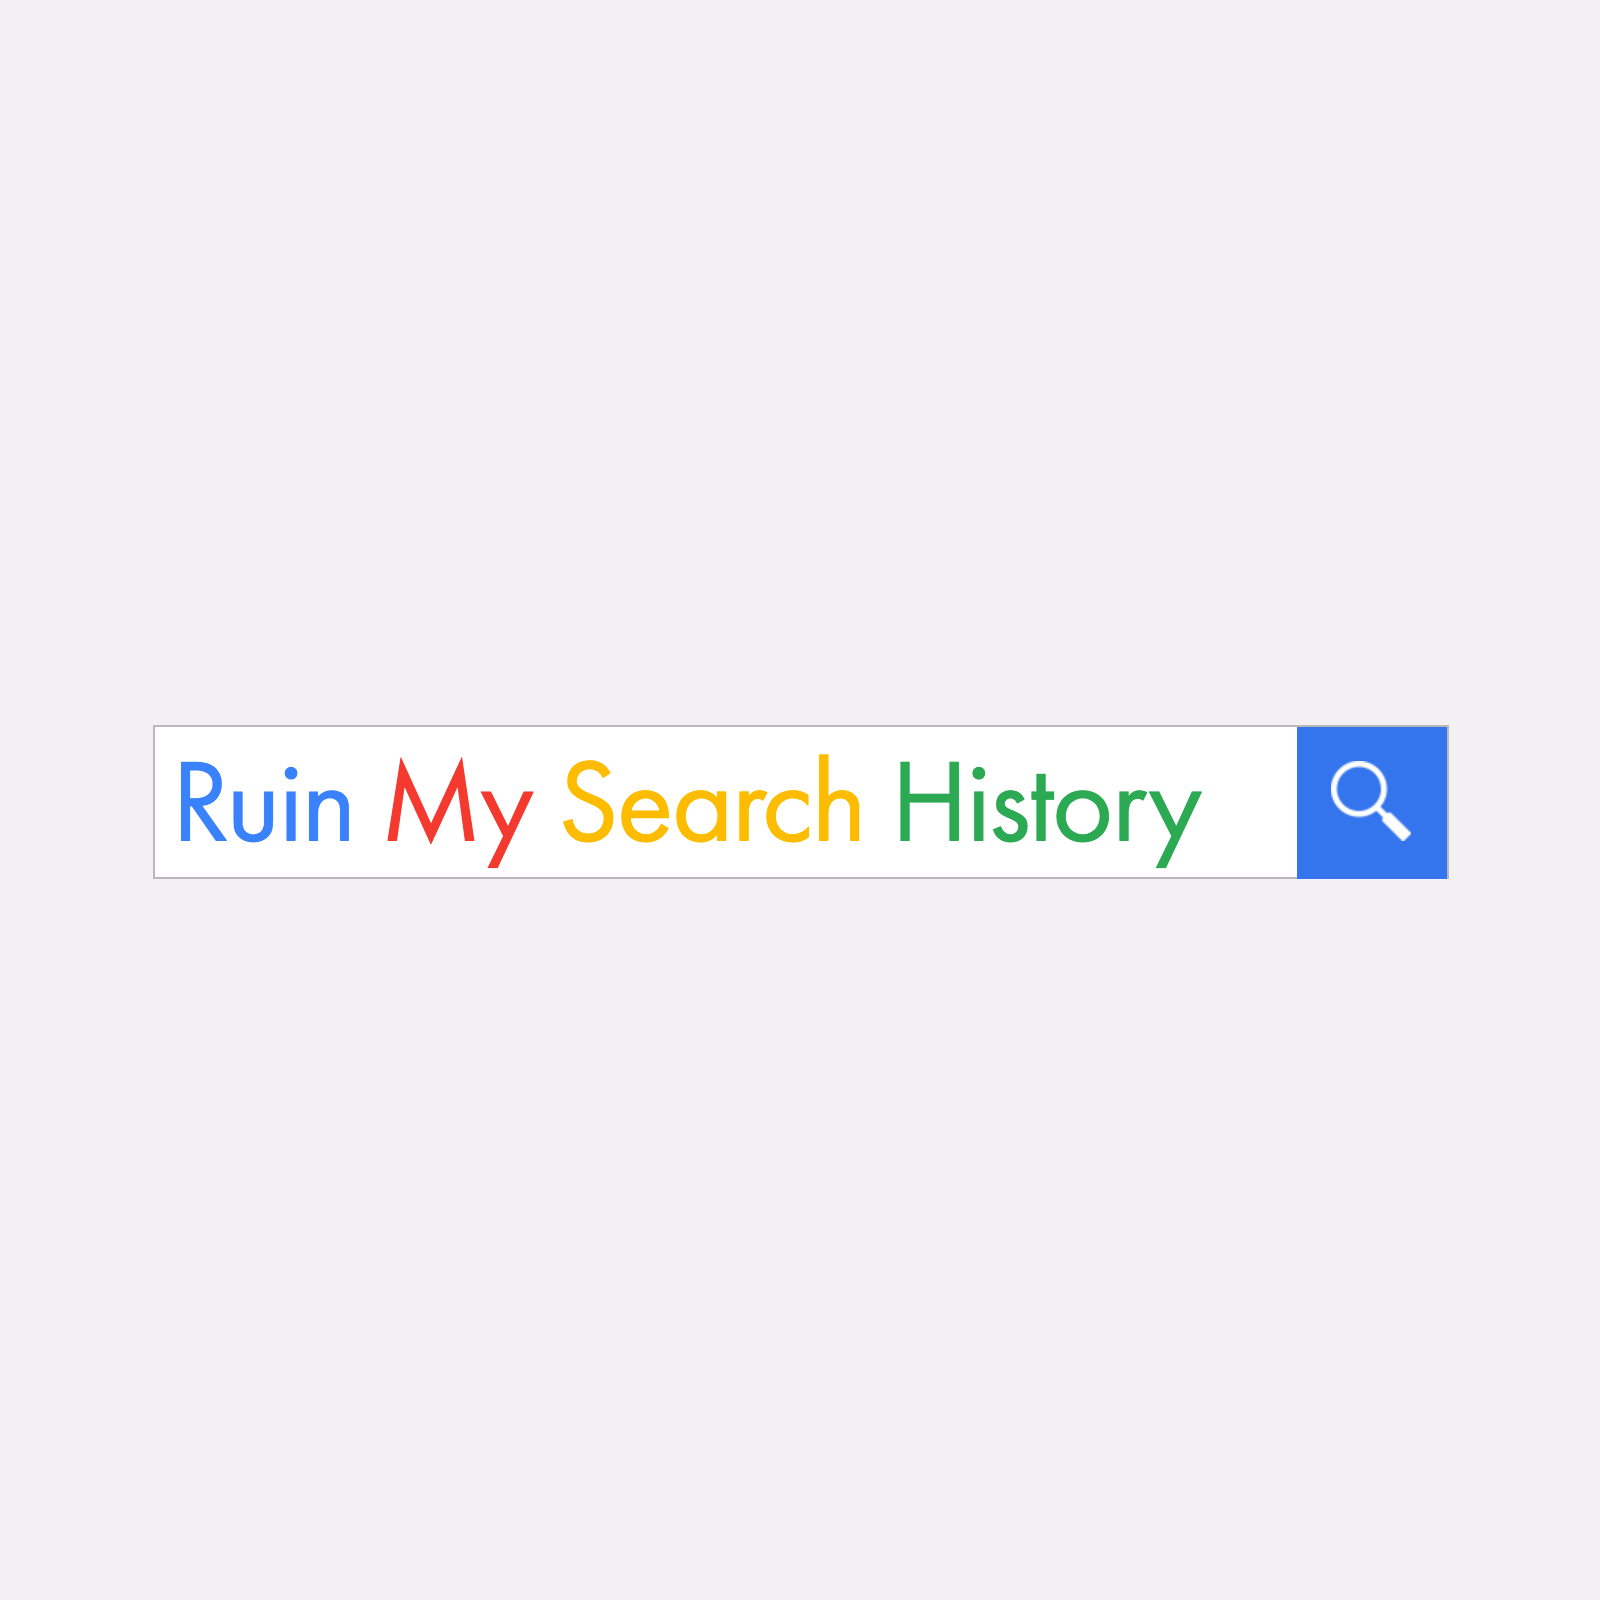 Ruin My Search History